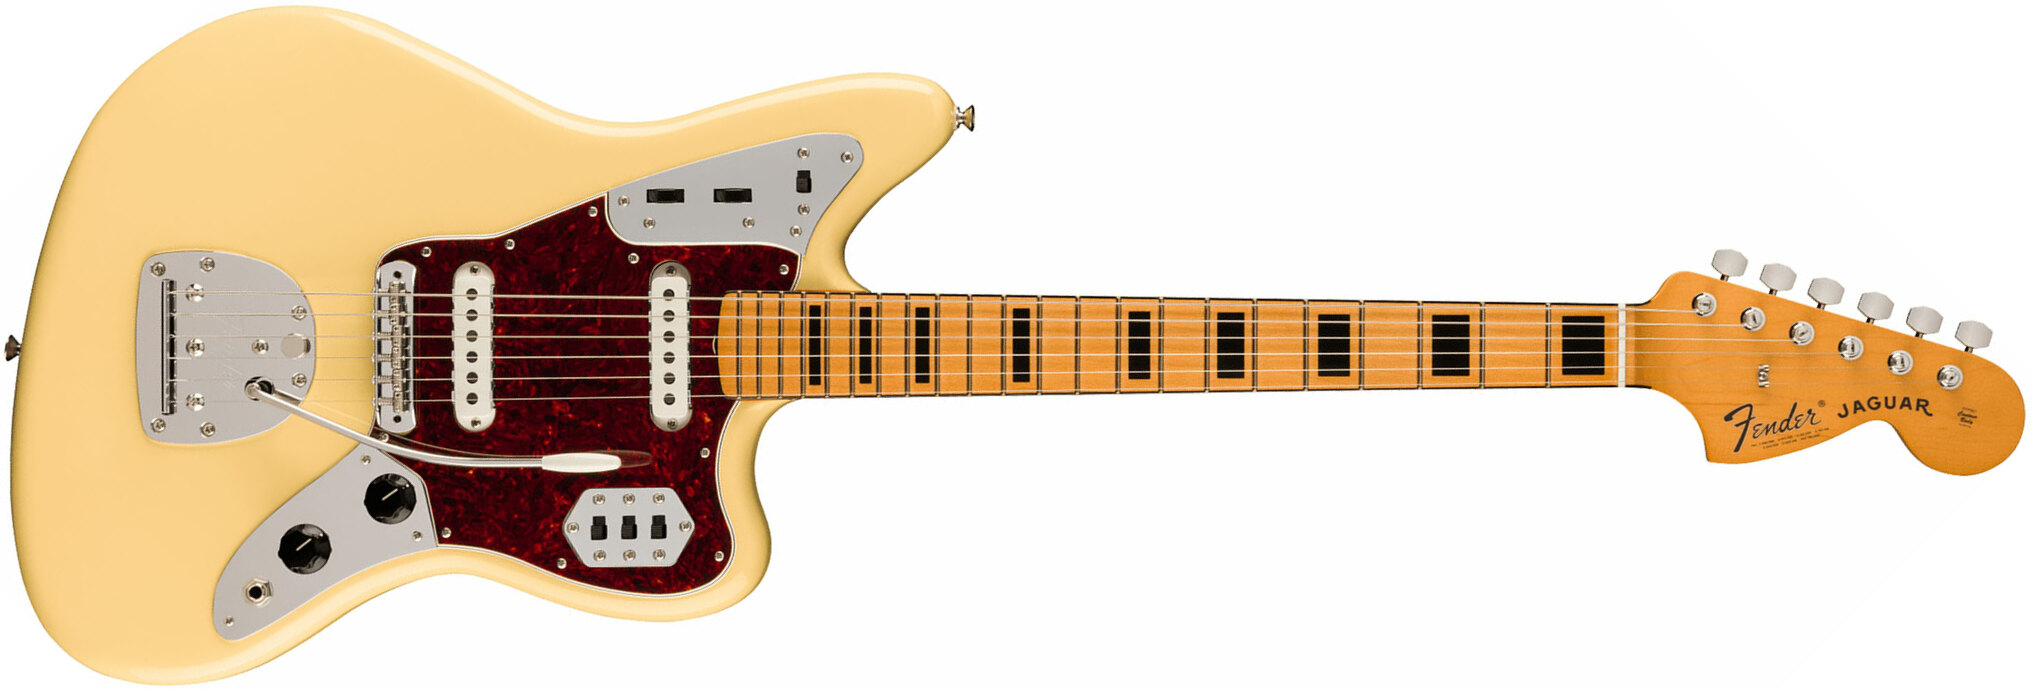 Fender Jaguar 70s Vintera 2 Mex 2s Trem Mn - Vintage White - Retro-rock elektrische gitaar - Main picture